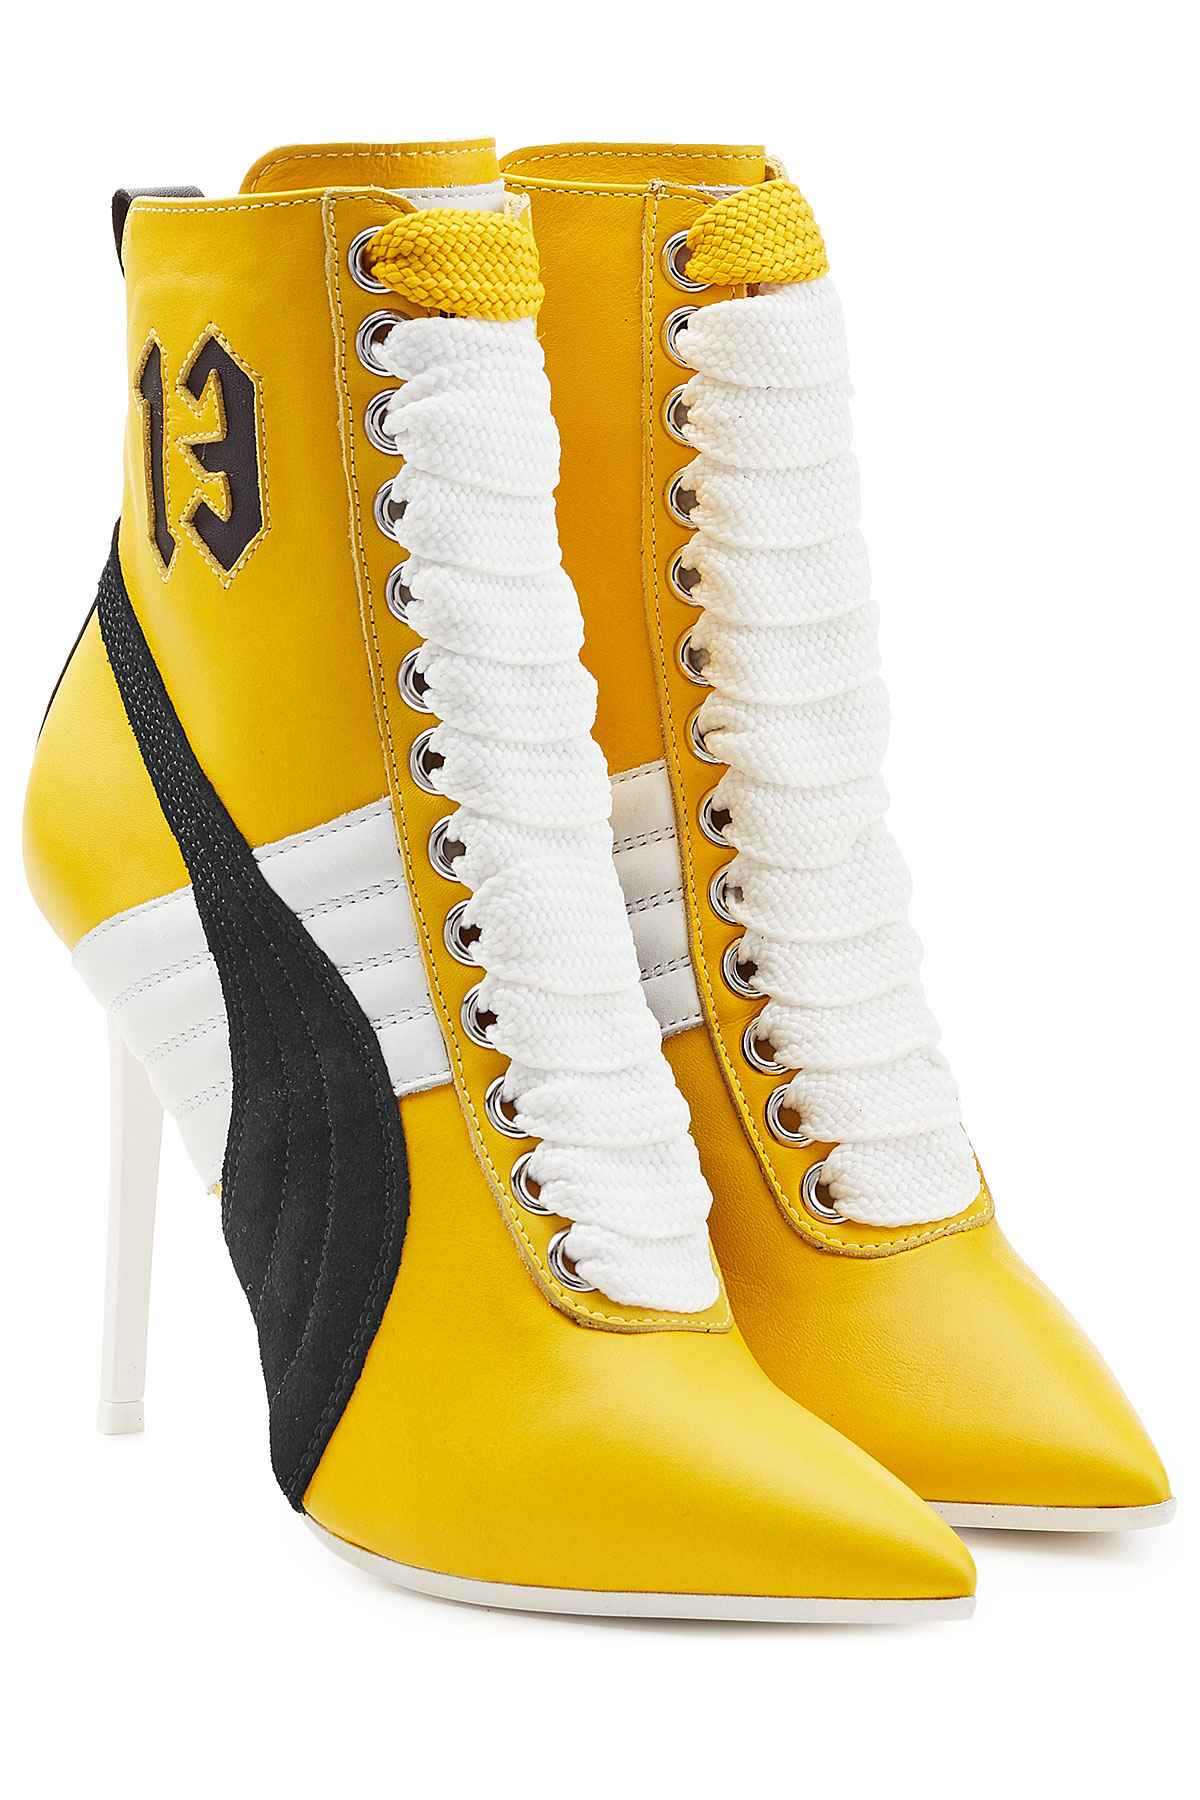 fenty puma boots yellow